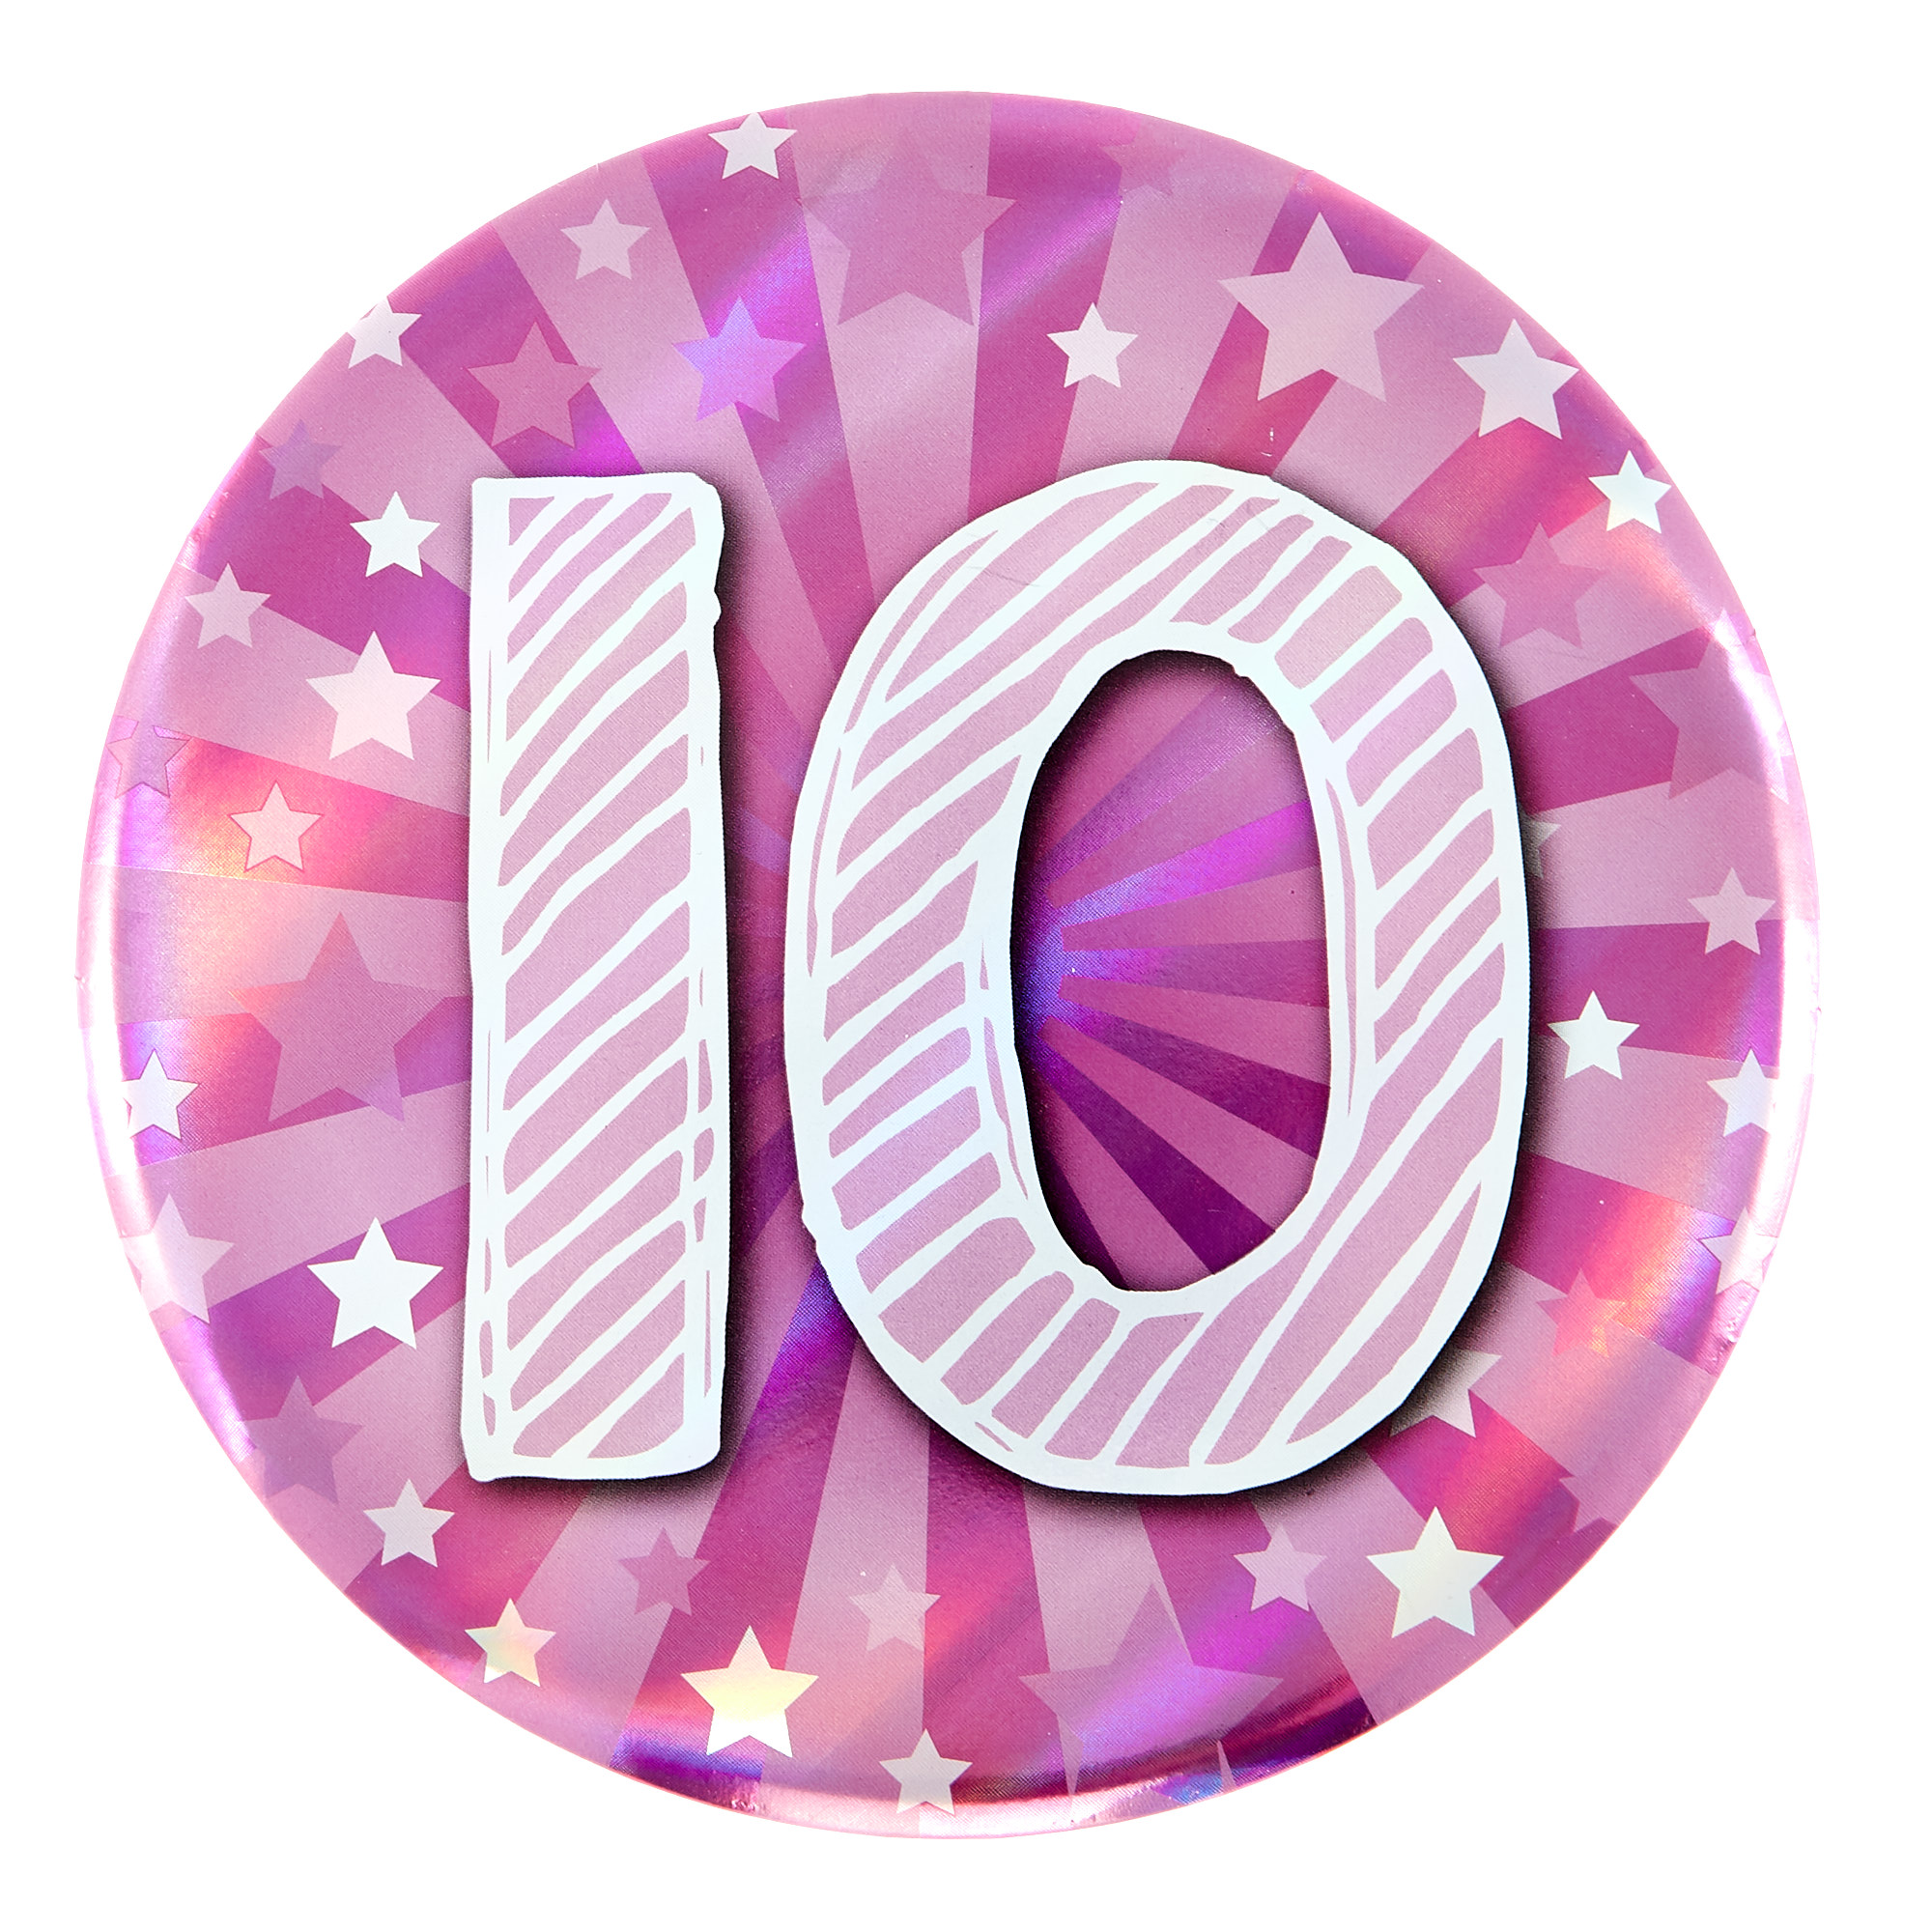 Giant 10th Birthday Badge - Pink